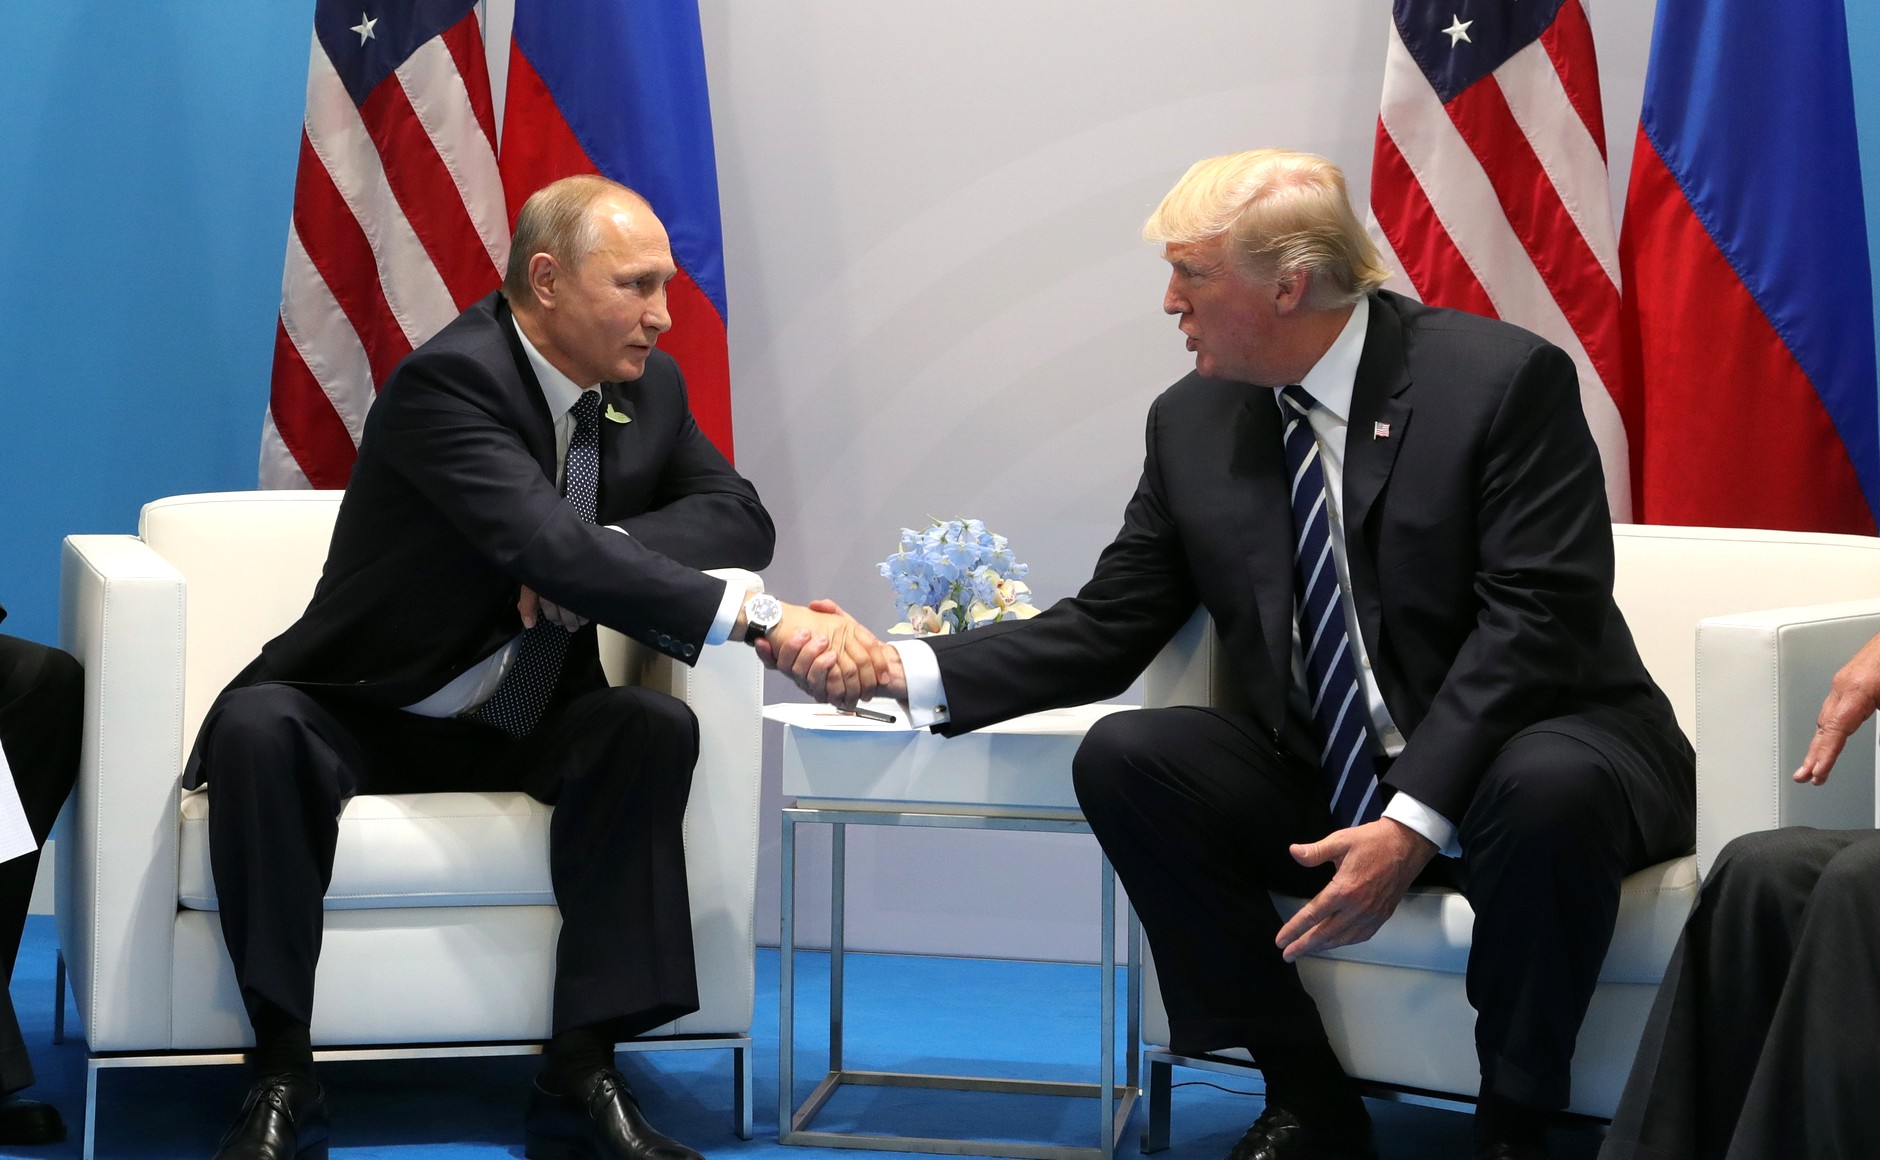 Vladimir_Putin_and_Donald_Trump_at_the_2017_G-20_Hamburg_Summit_(2)